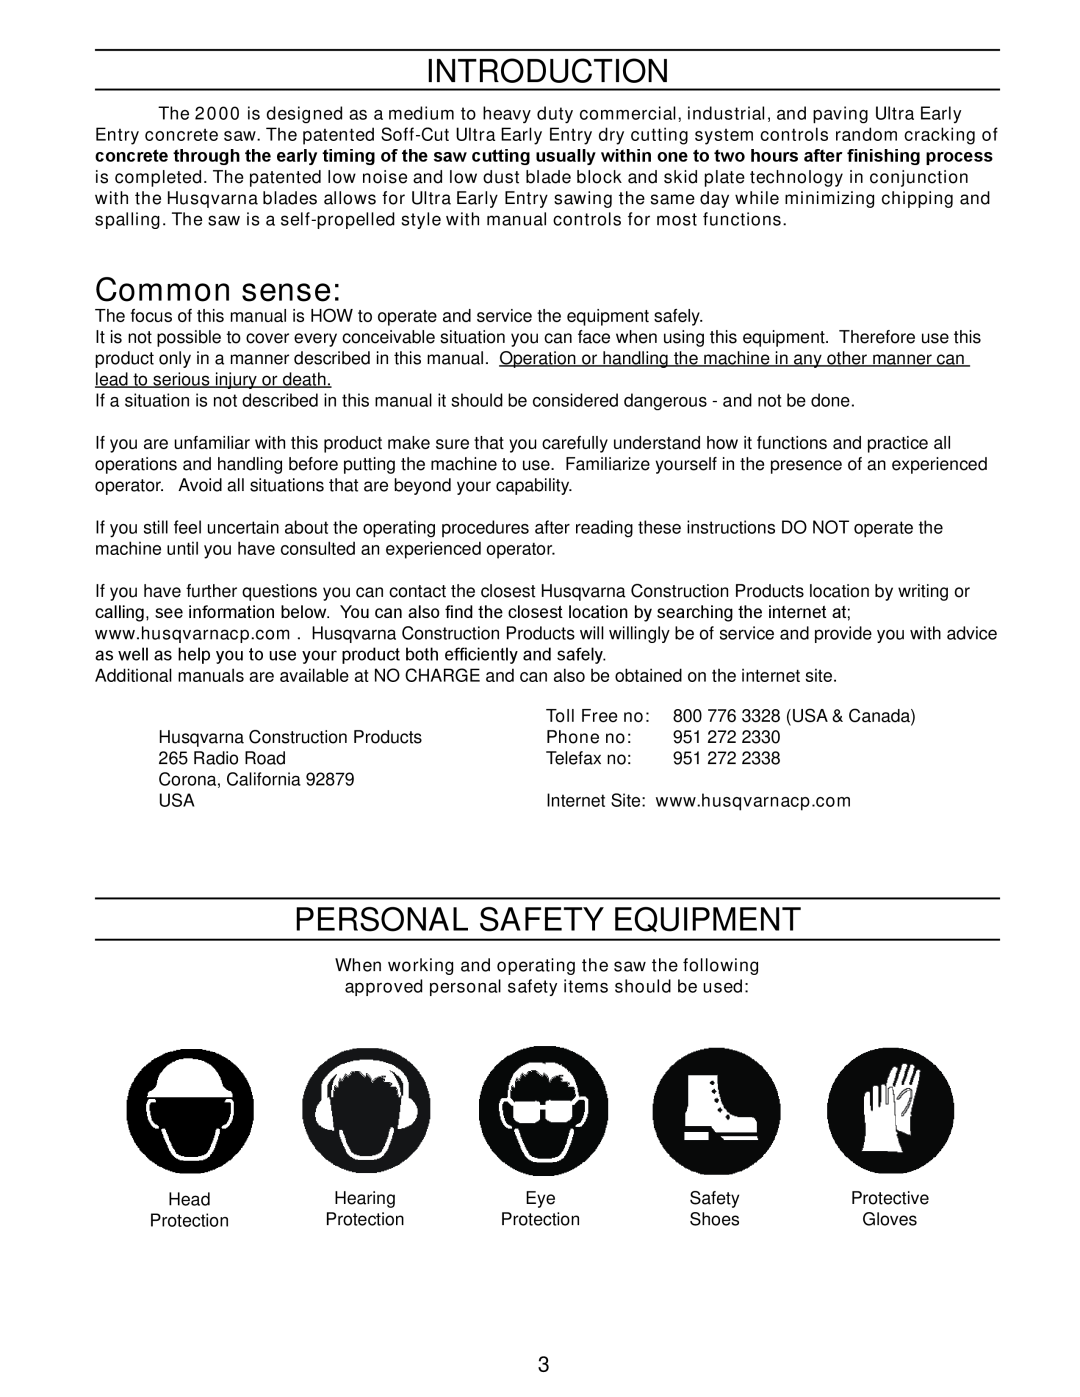 Husqvarna 2000 manual Introduction, Common sense, Personal Safety Equipment 